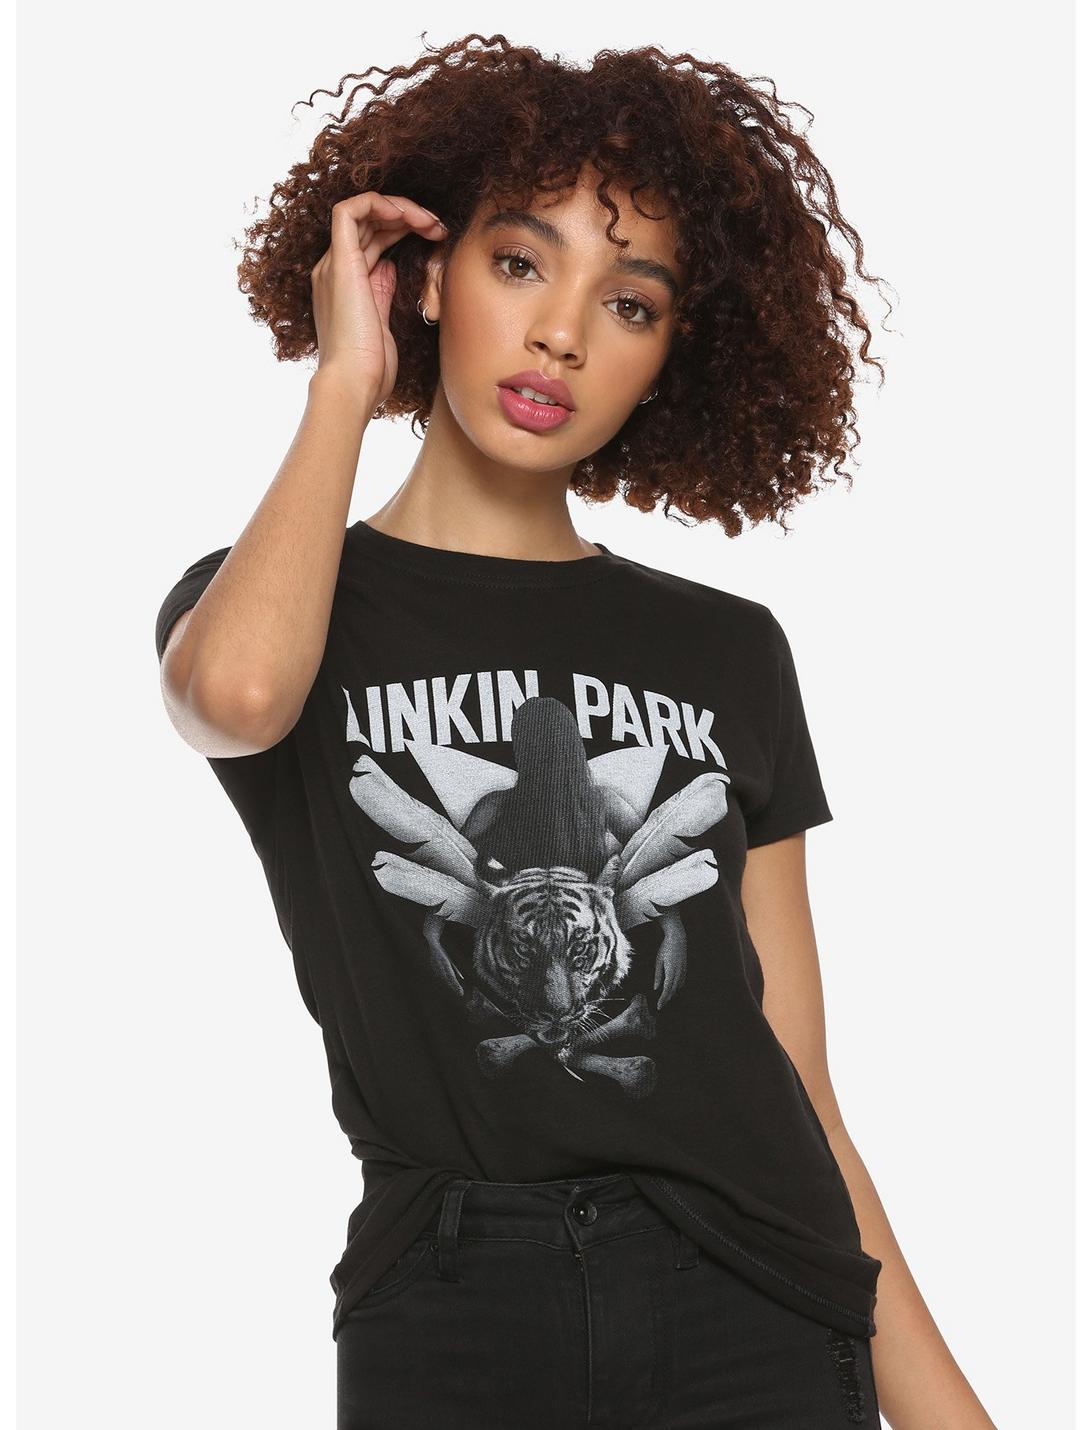 Linkin Park A Thousand Suns Tour Girls T-Shirt, BLACK, hi-res